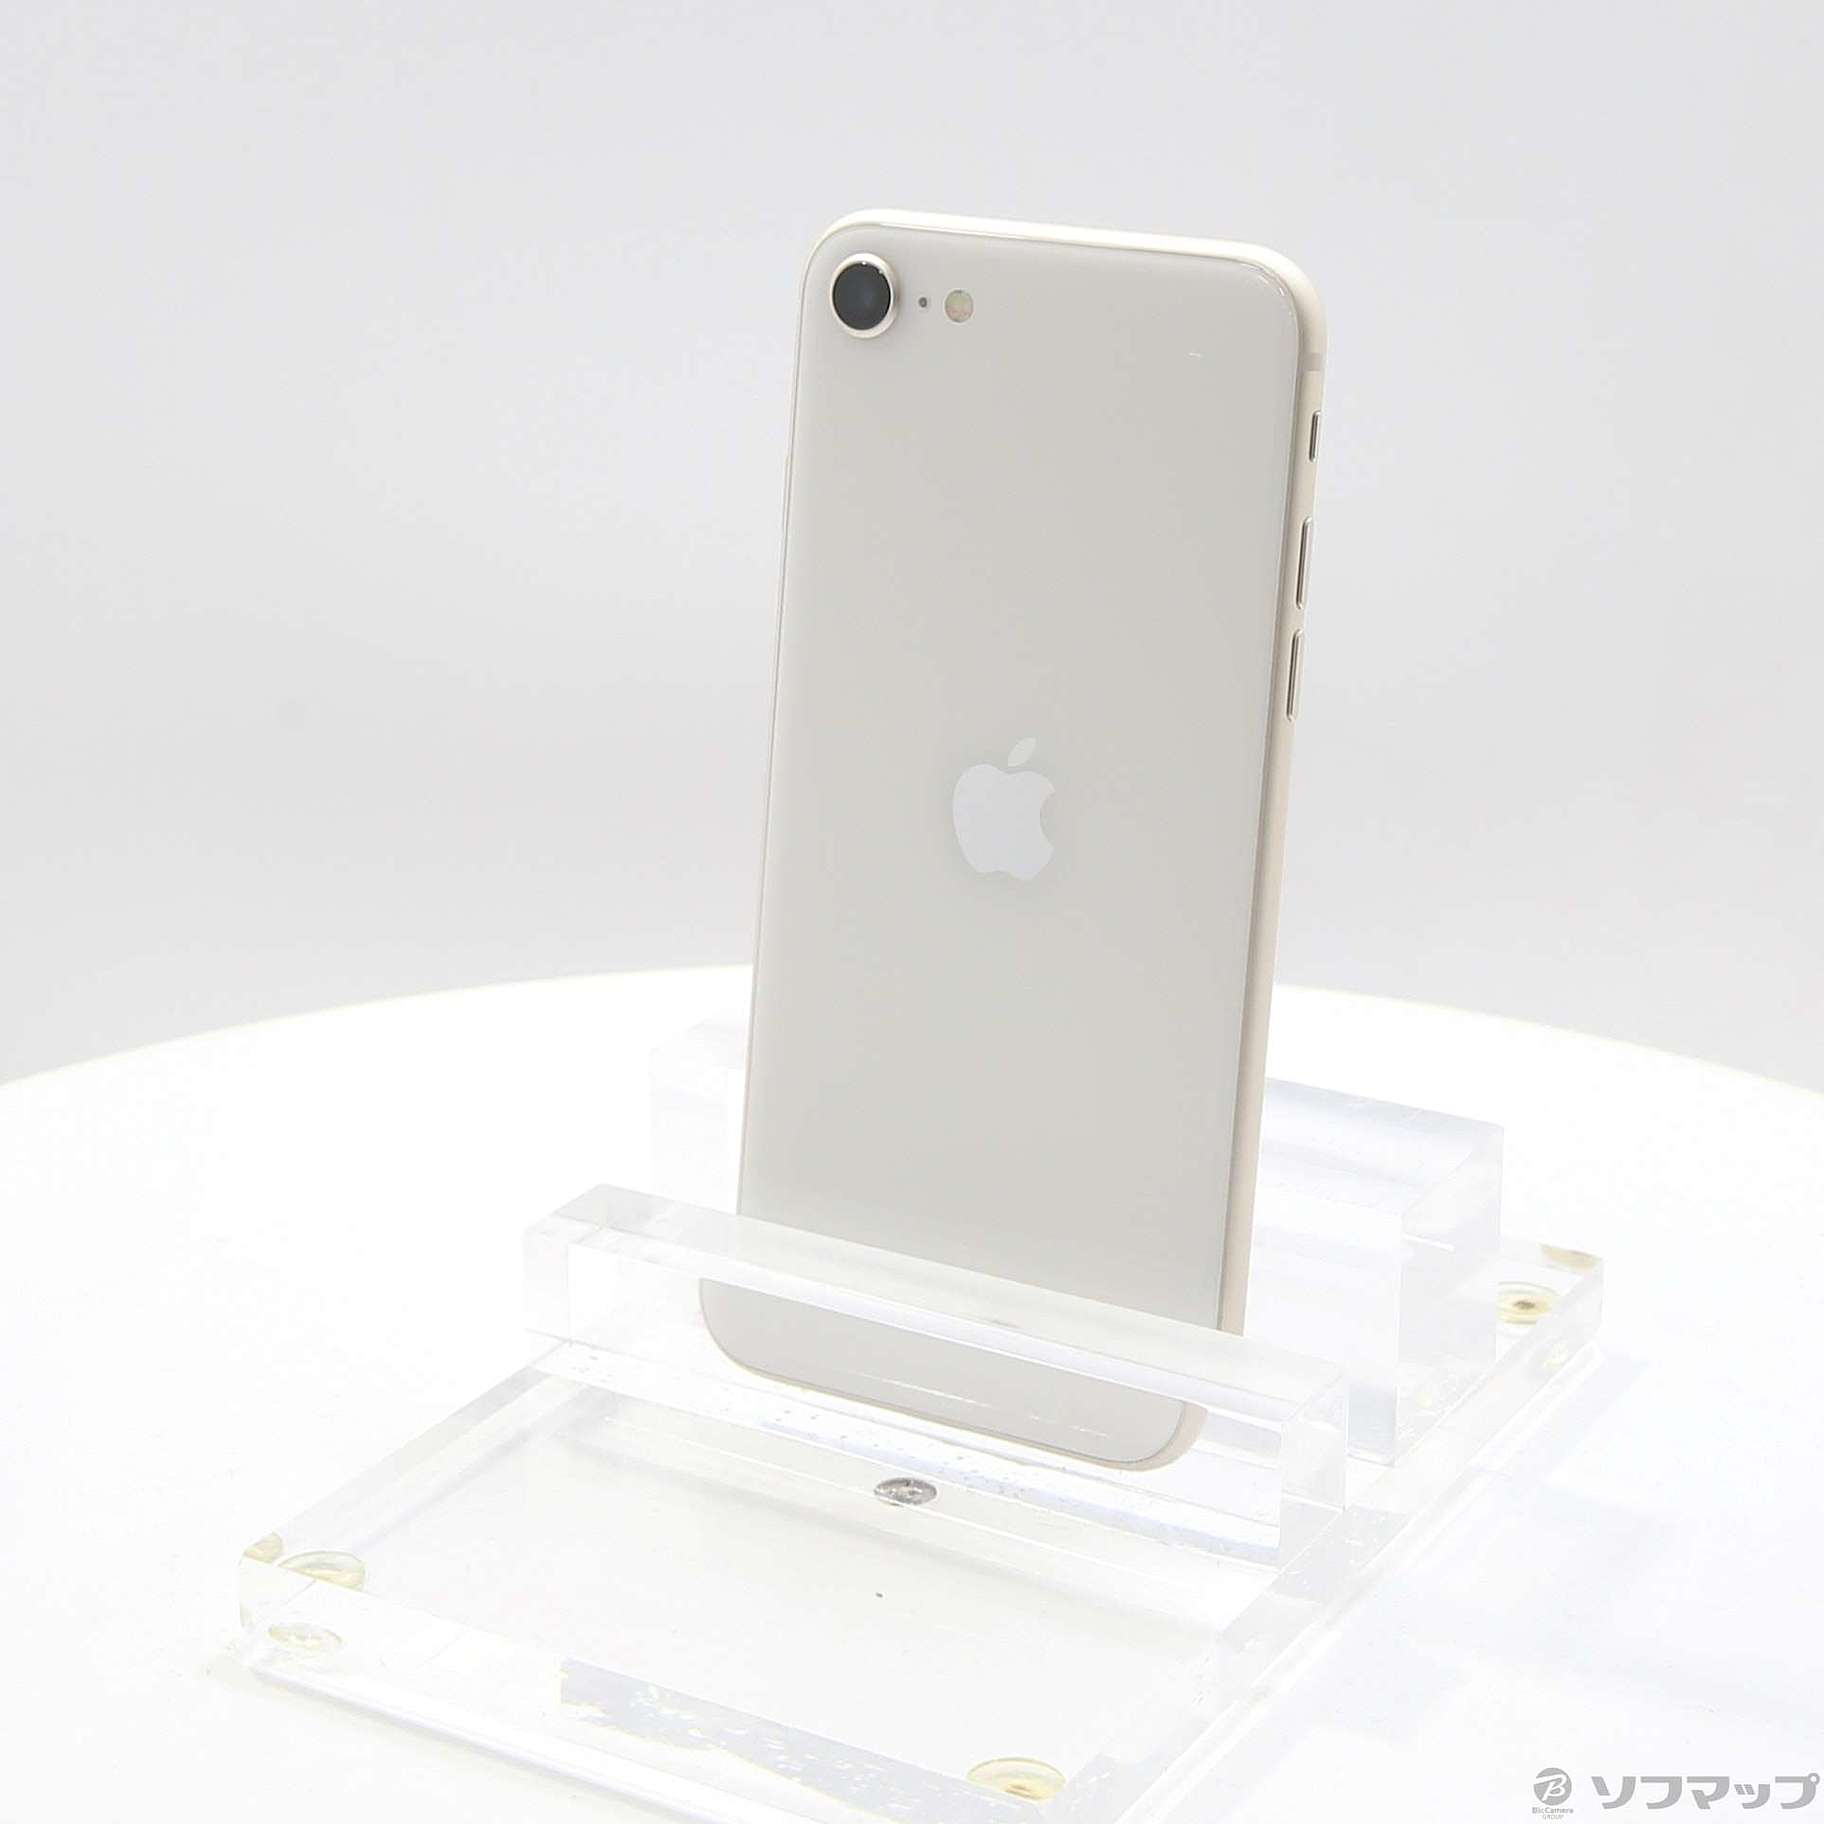 iPhone SE (第3世代) 128GB SIMフリー [スターライト] 中古(白ロム)価格比較 - 価格.com